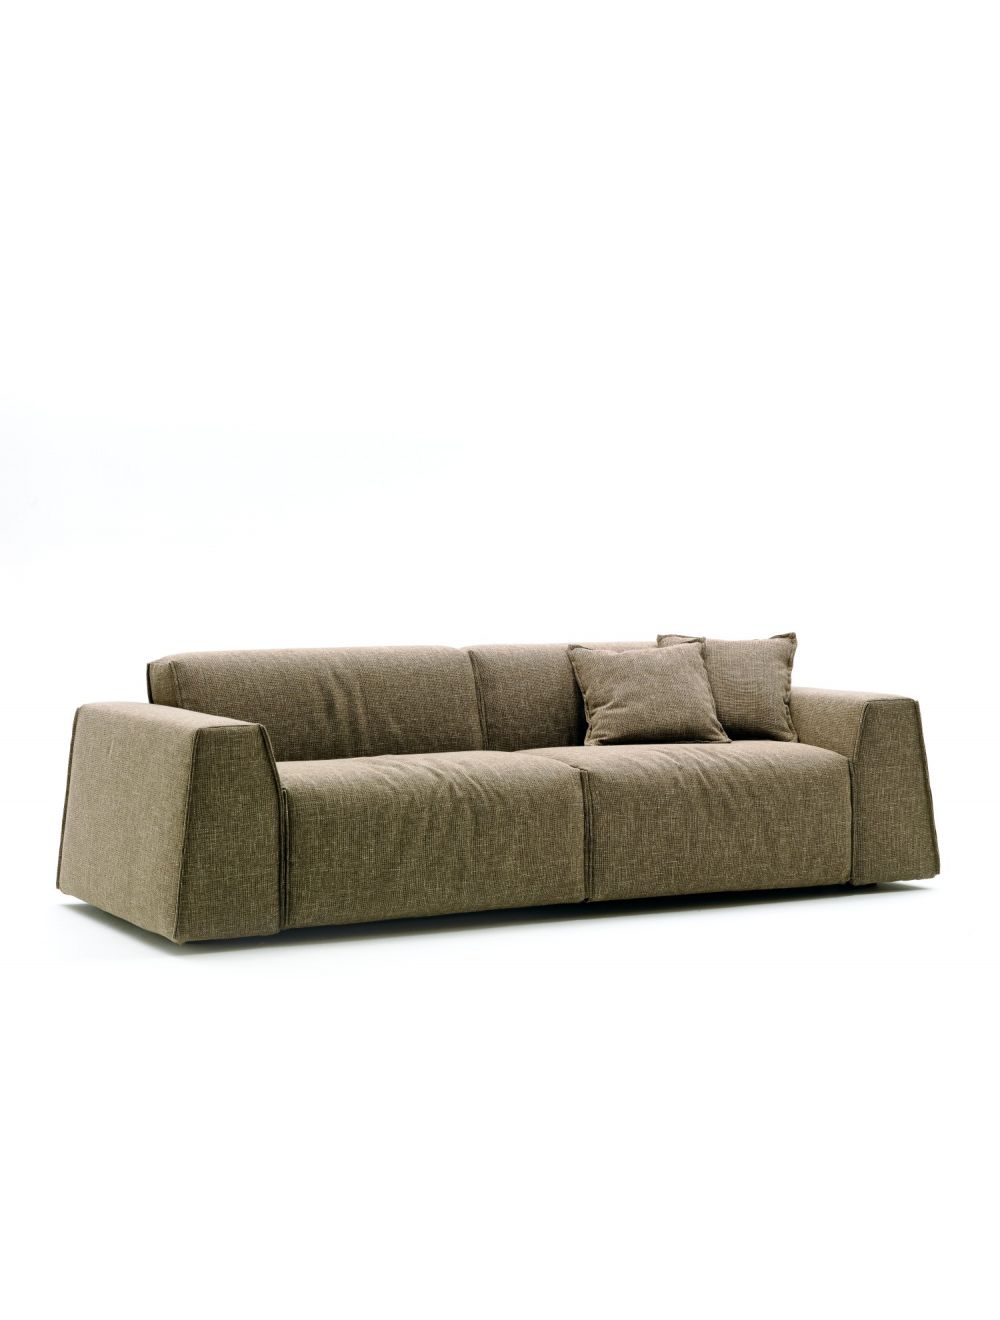 Parker - Sofa - Milano Bedding Online Shop | Sedie.Design®